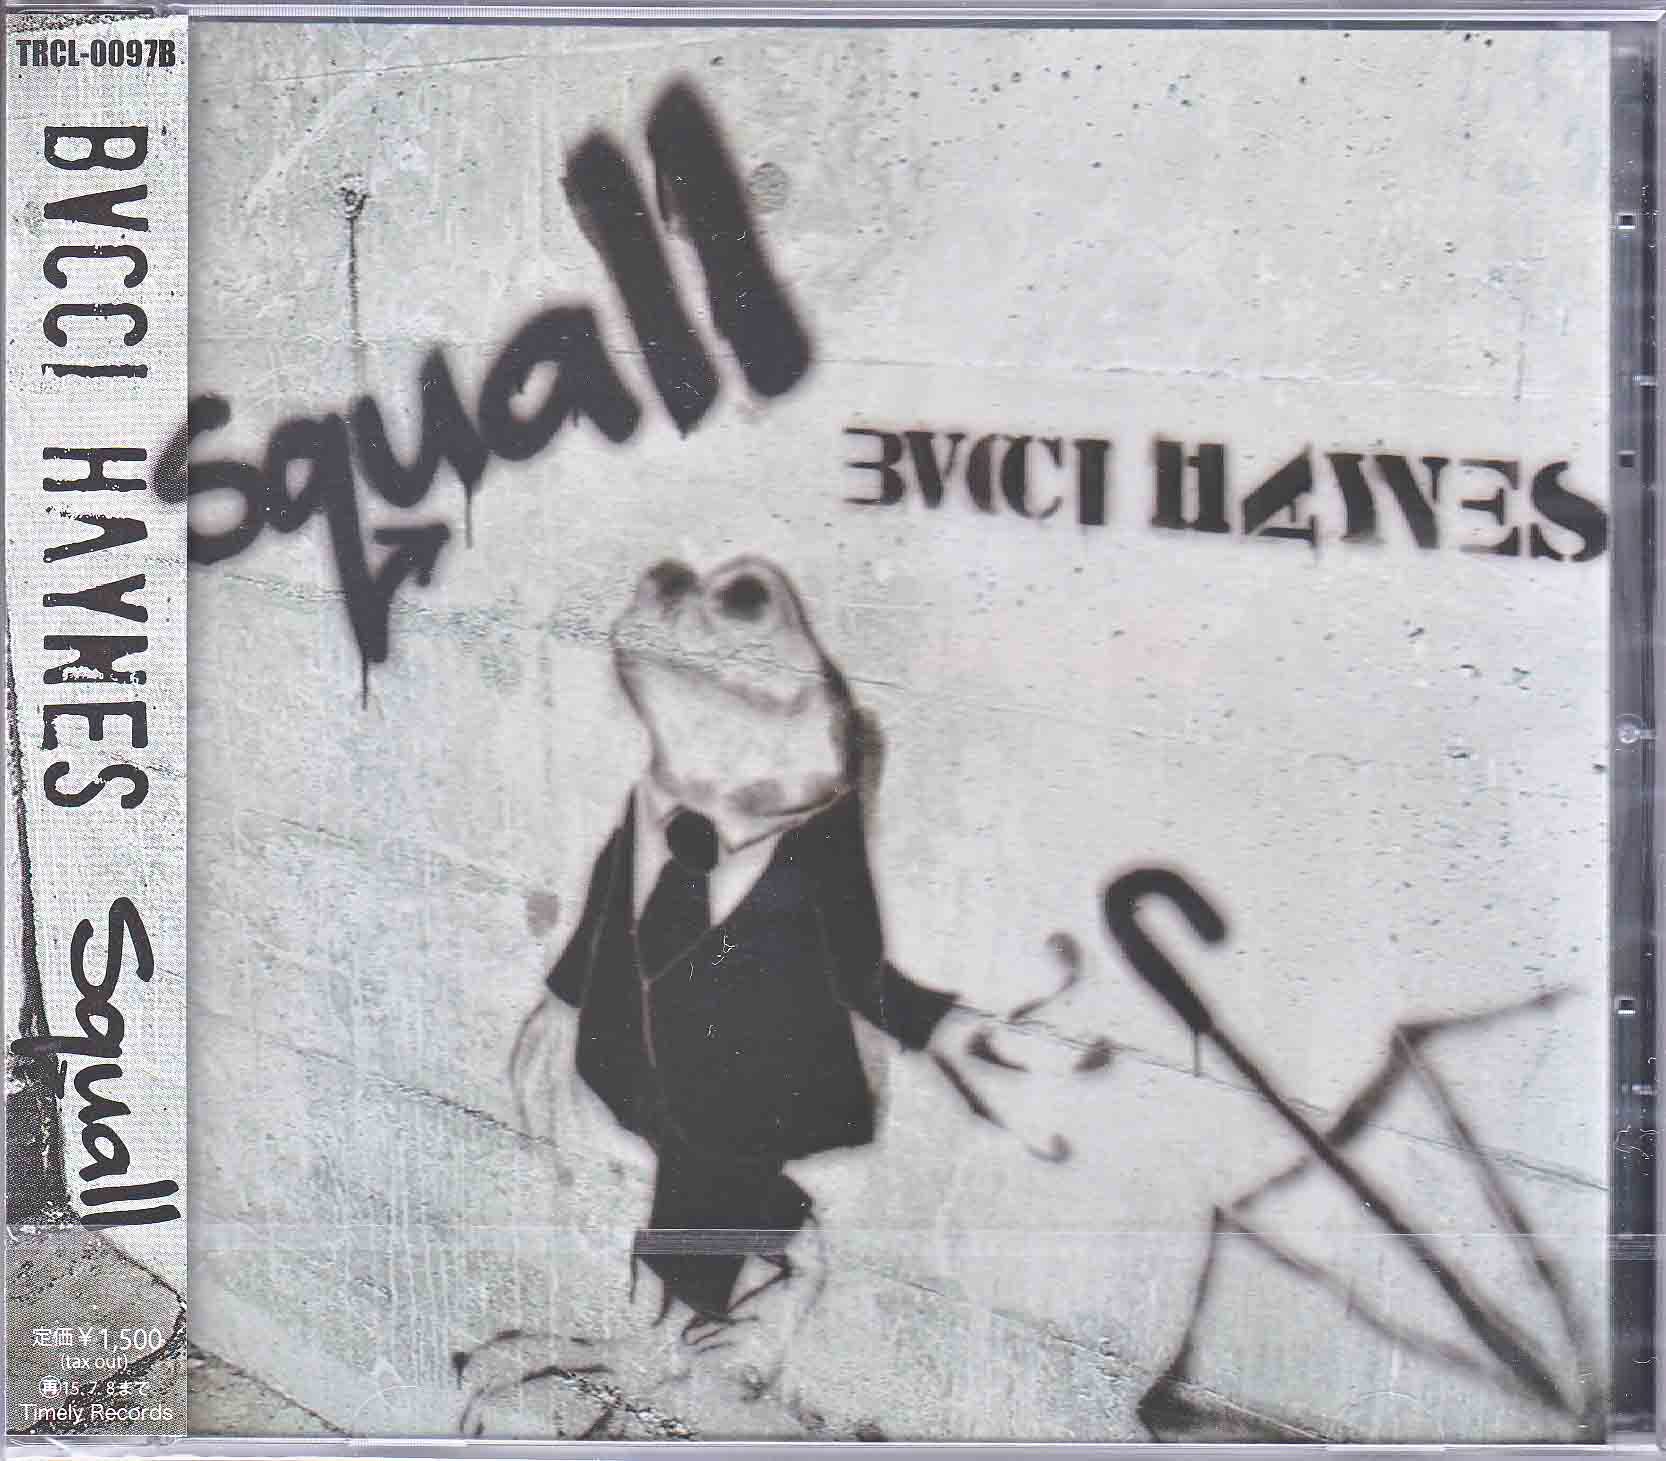 BVCCI HAYNES ( ブッチヘインズ )  の CD Squall【通常盤】